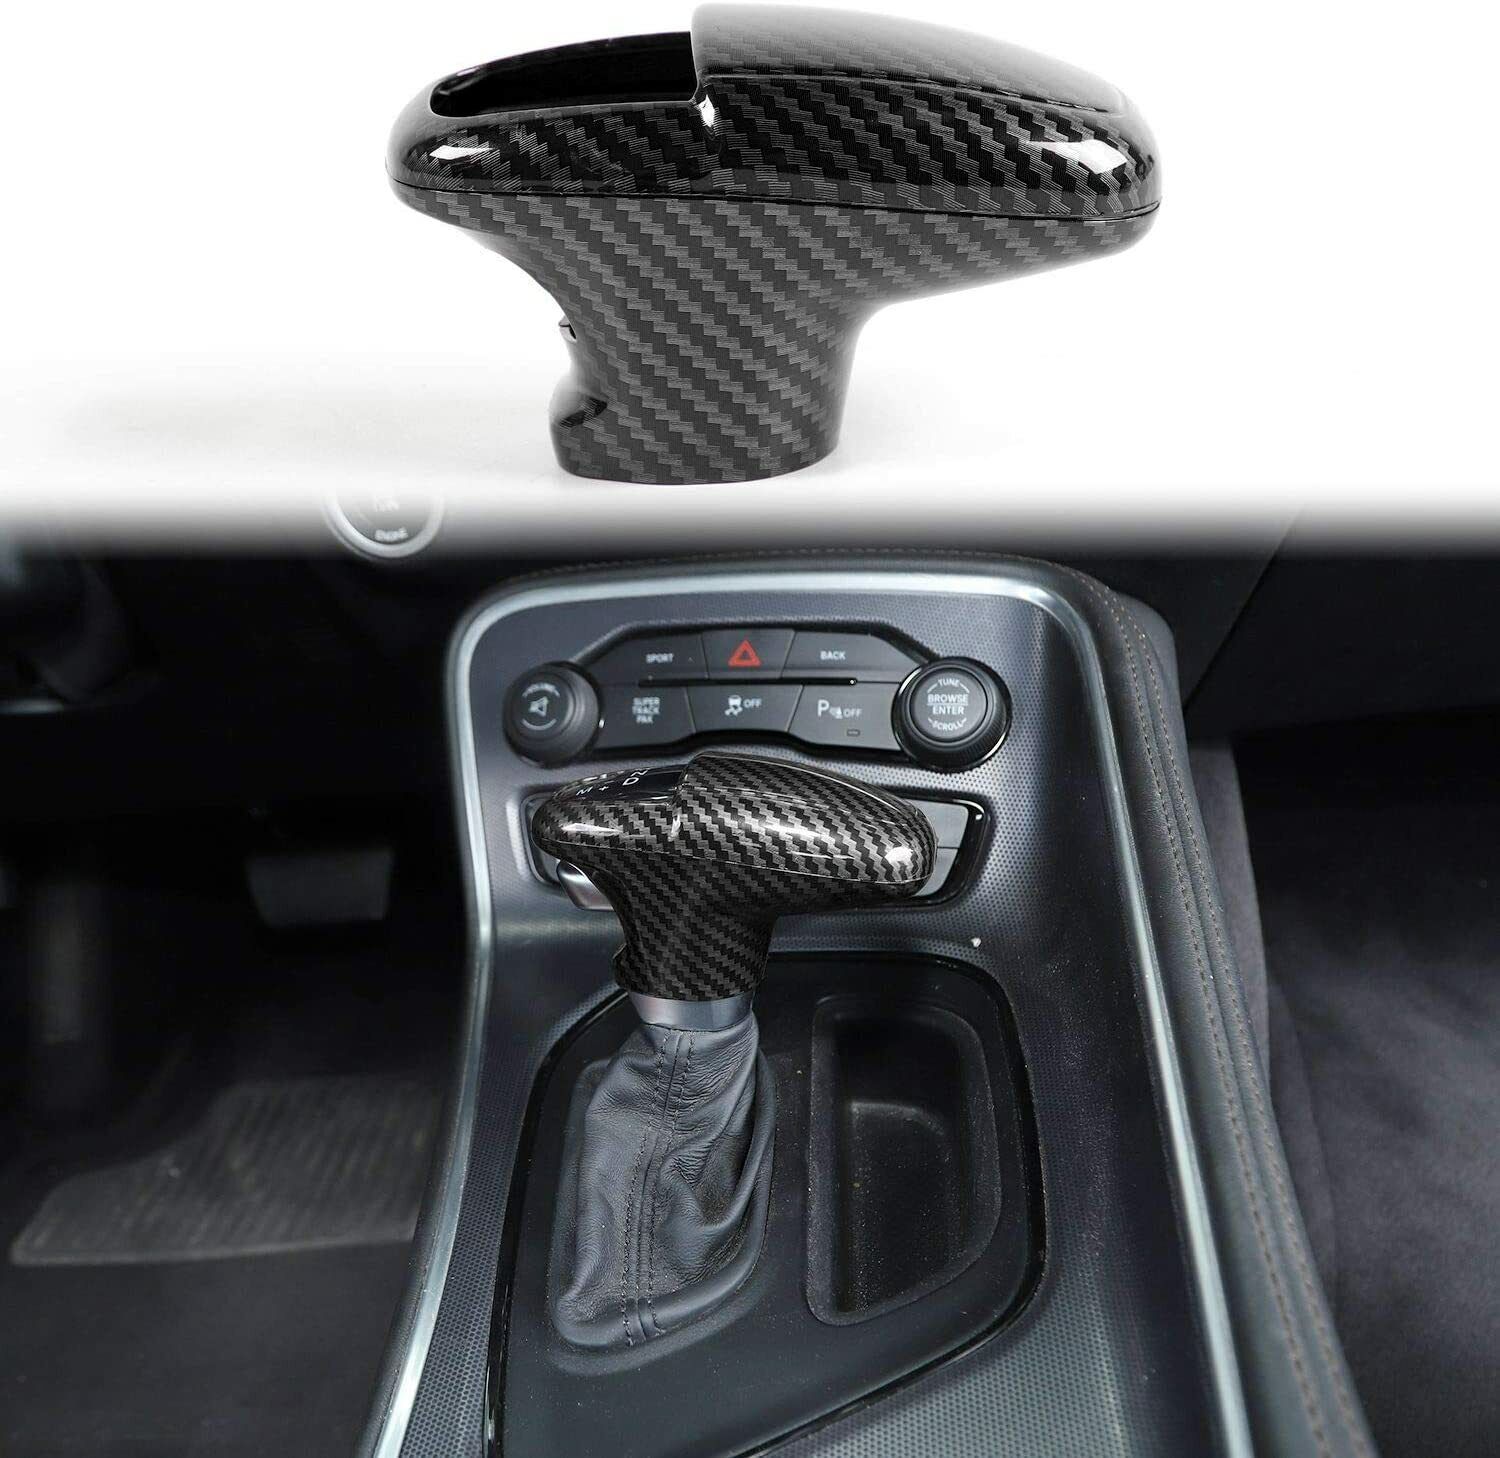 Carbon Fiber Gear Shift Knob Decor Cover Trim for Dodge Challenger/Charger 2015+